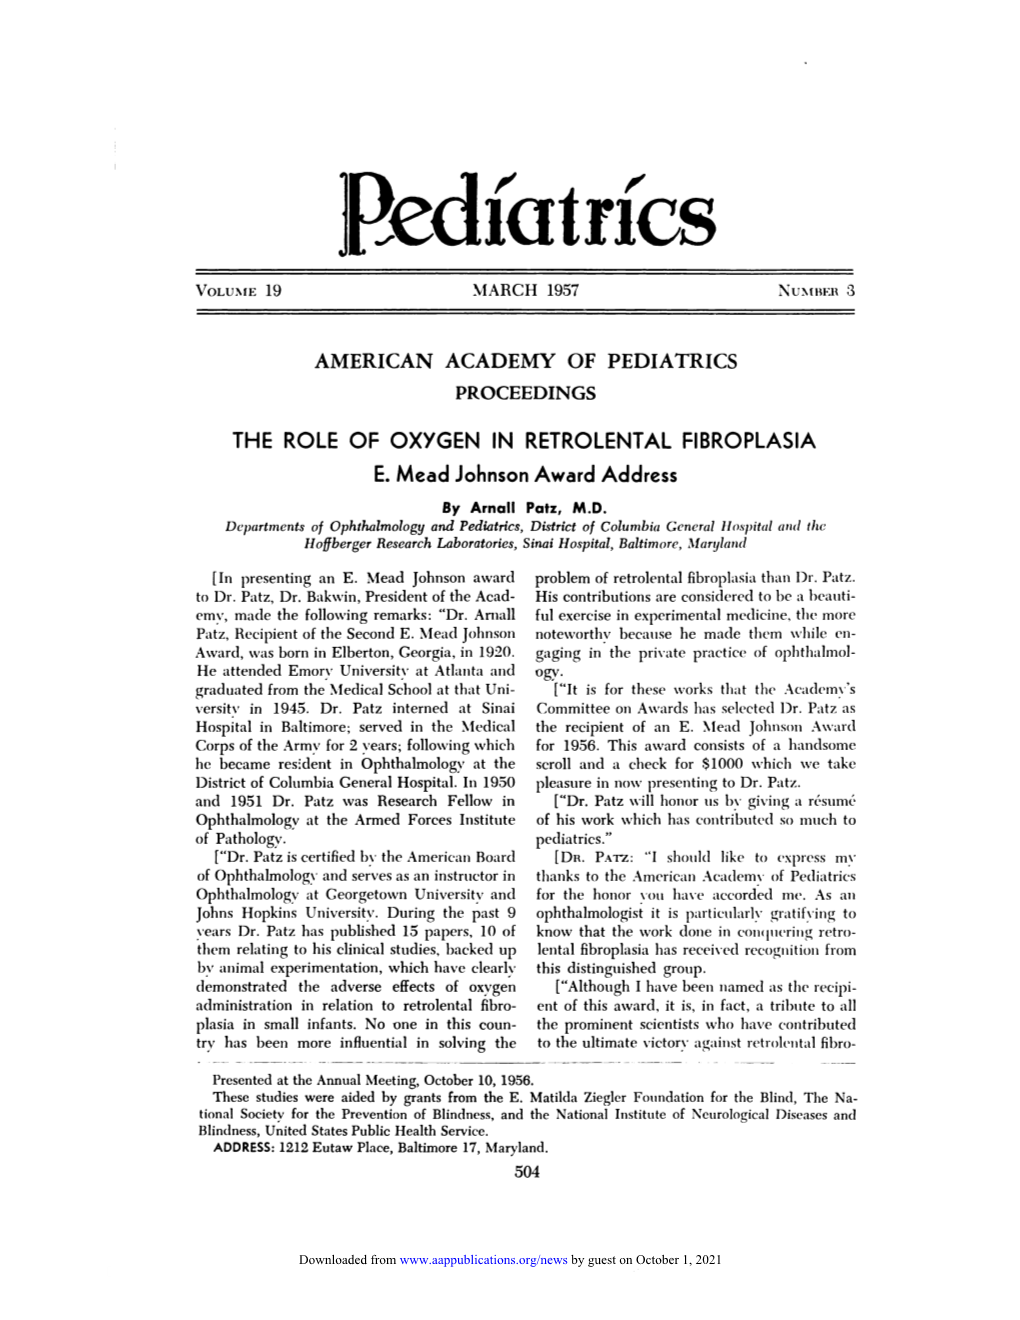 American Academy of Pediatrics Proceedings